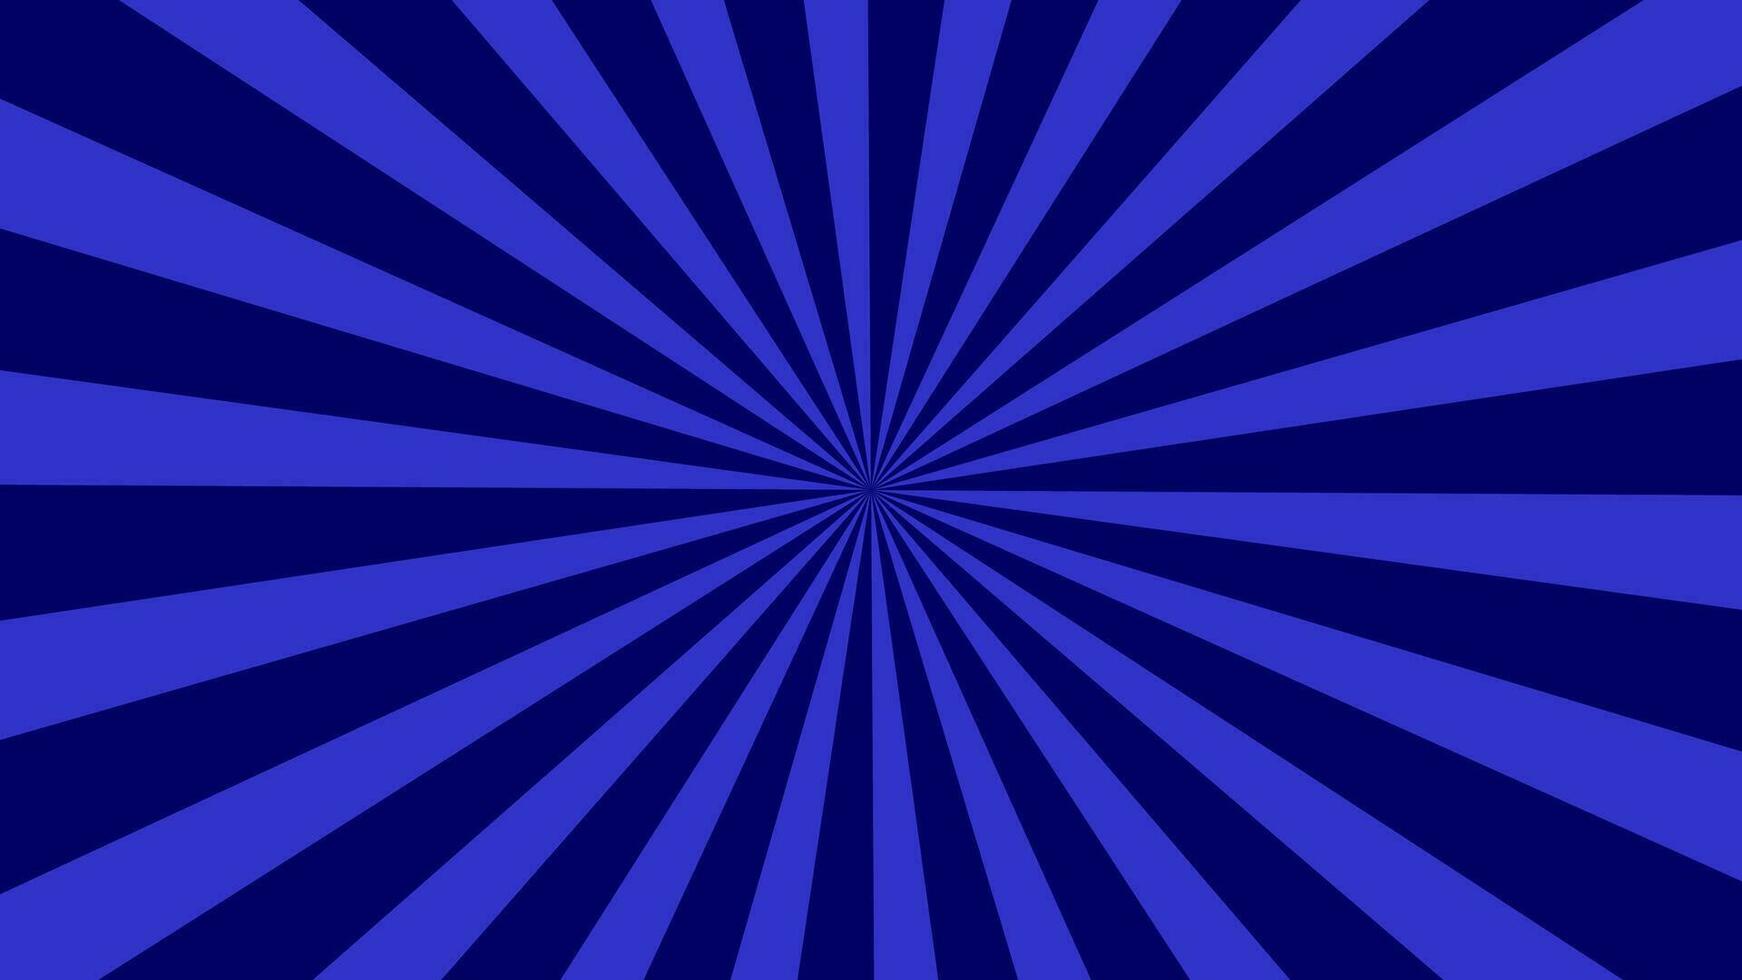 zonnestraal structuur patroon achtergrond blauw donker vector